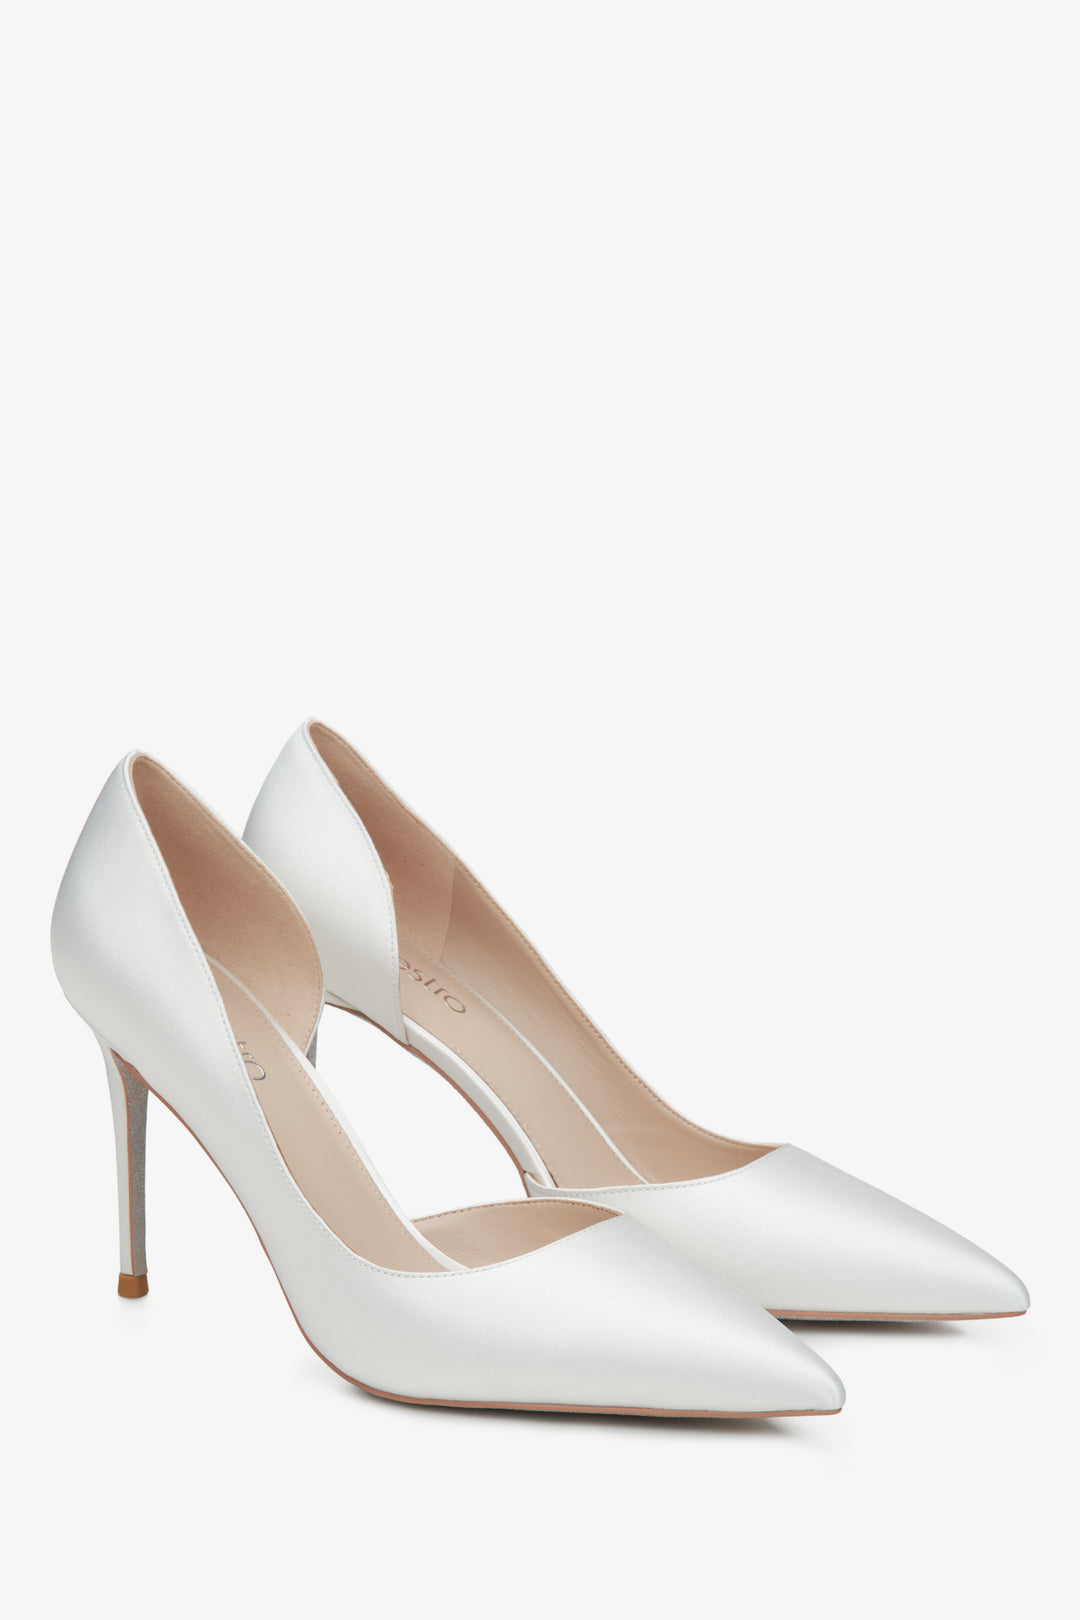 Women's milk-white Estro high heels with a satin finish.